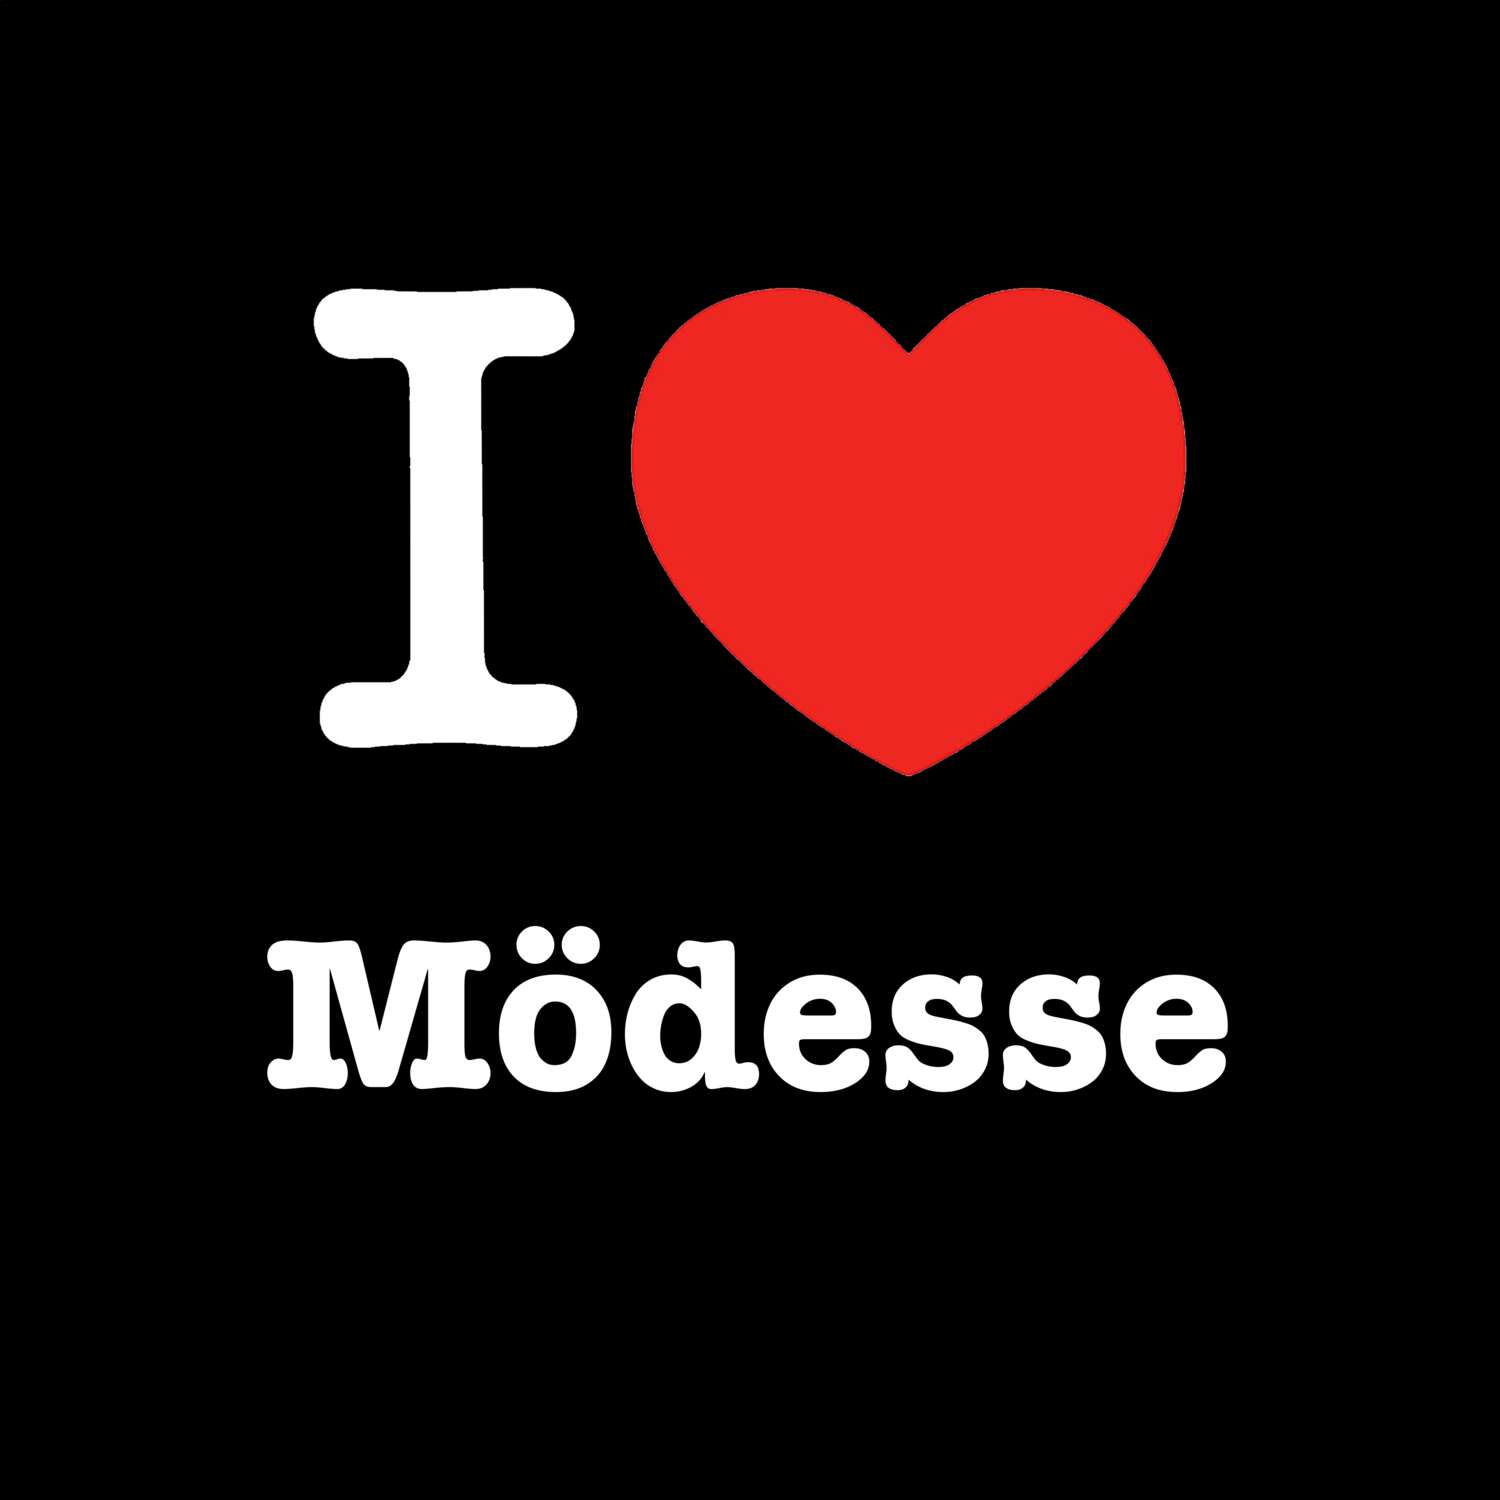 Mödesse T-Shirt »I love«